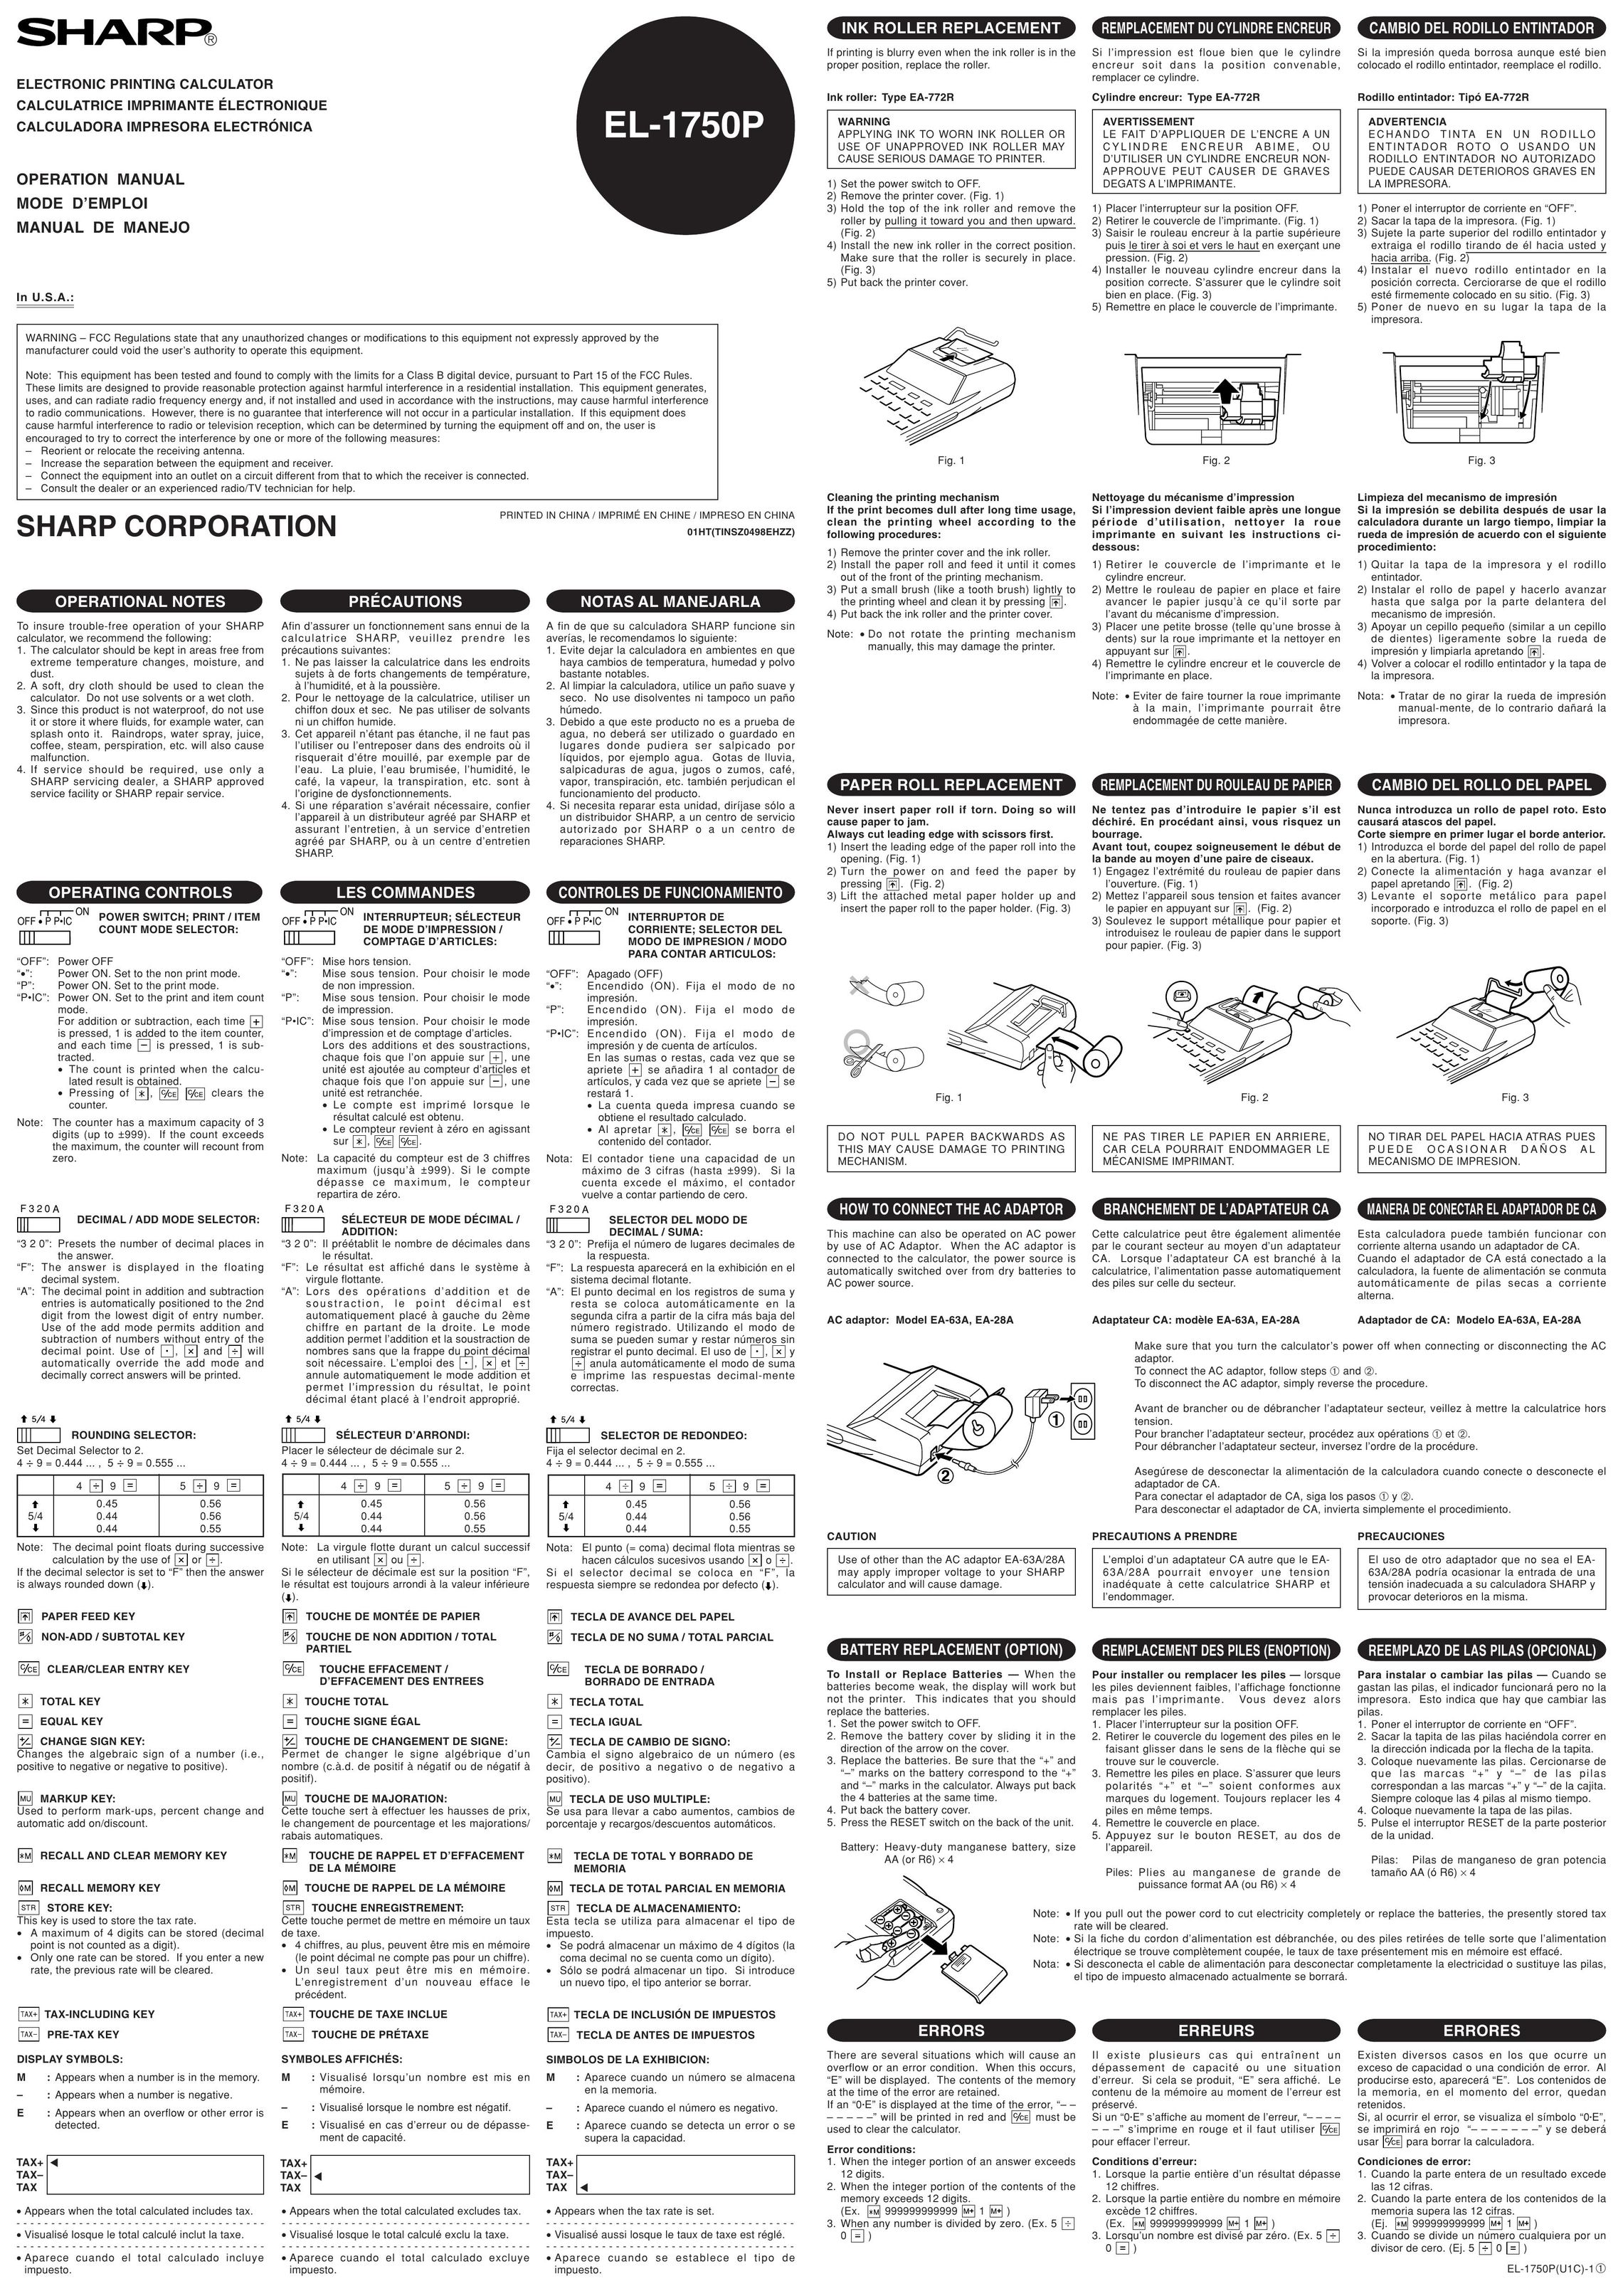 Sharp EL-1750P Calculator User Manual